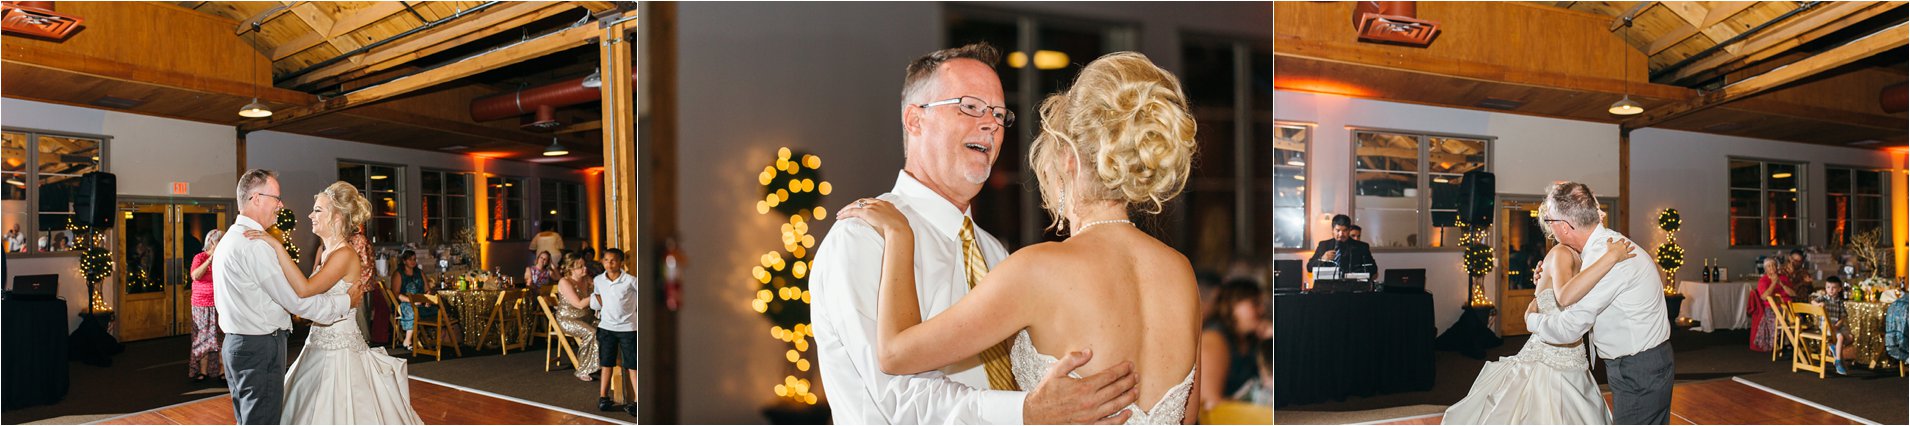 Bride dances with her dad